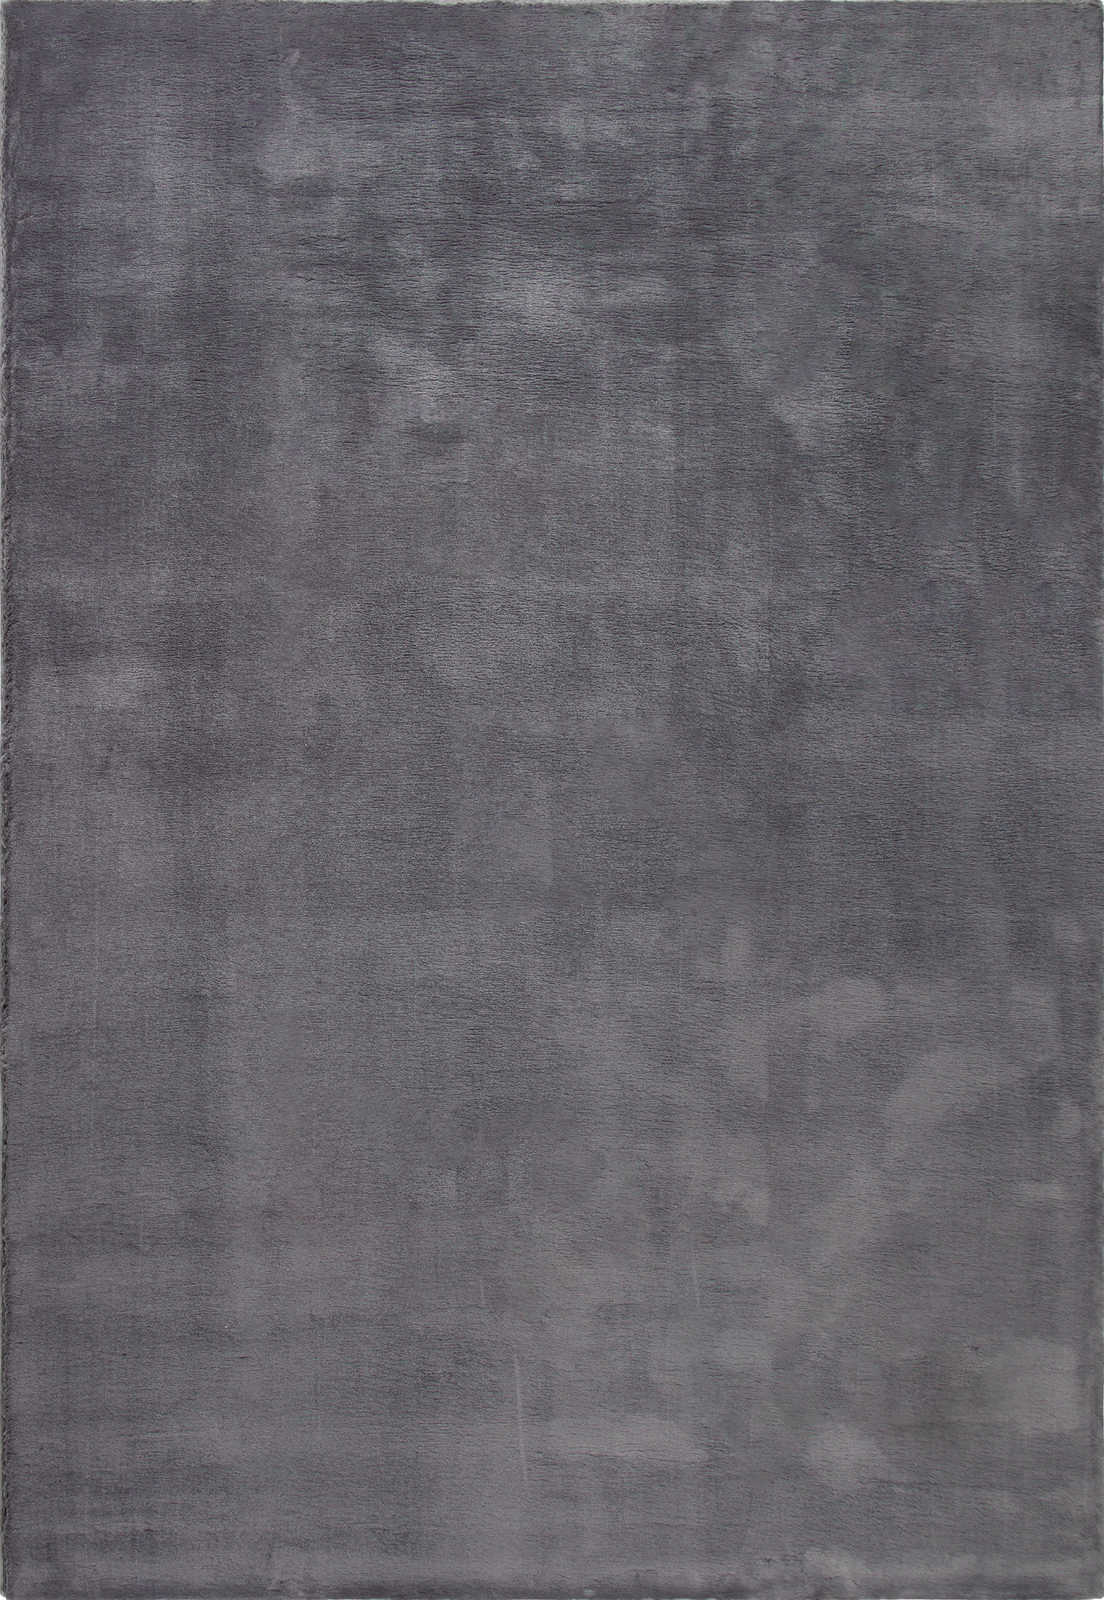             Modern high pile carpet in anthracite - 290 x 200 cm
        